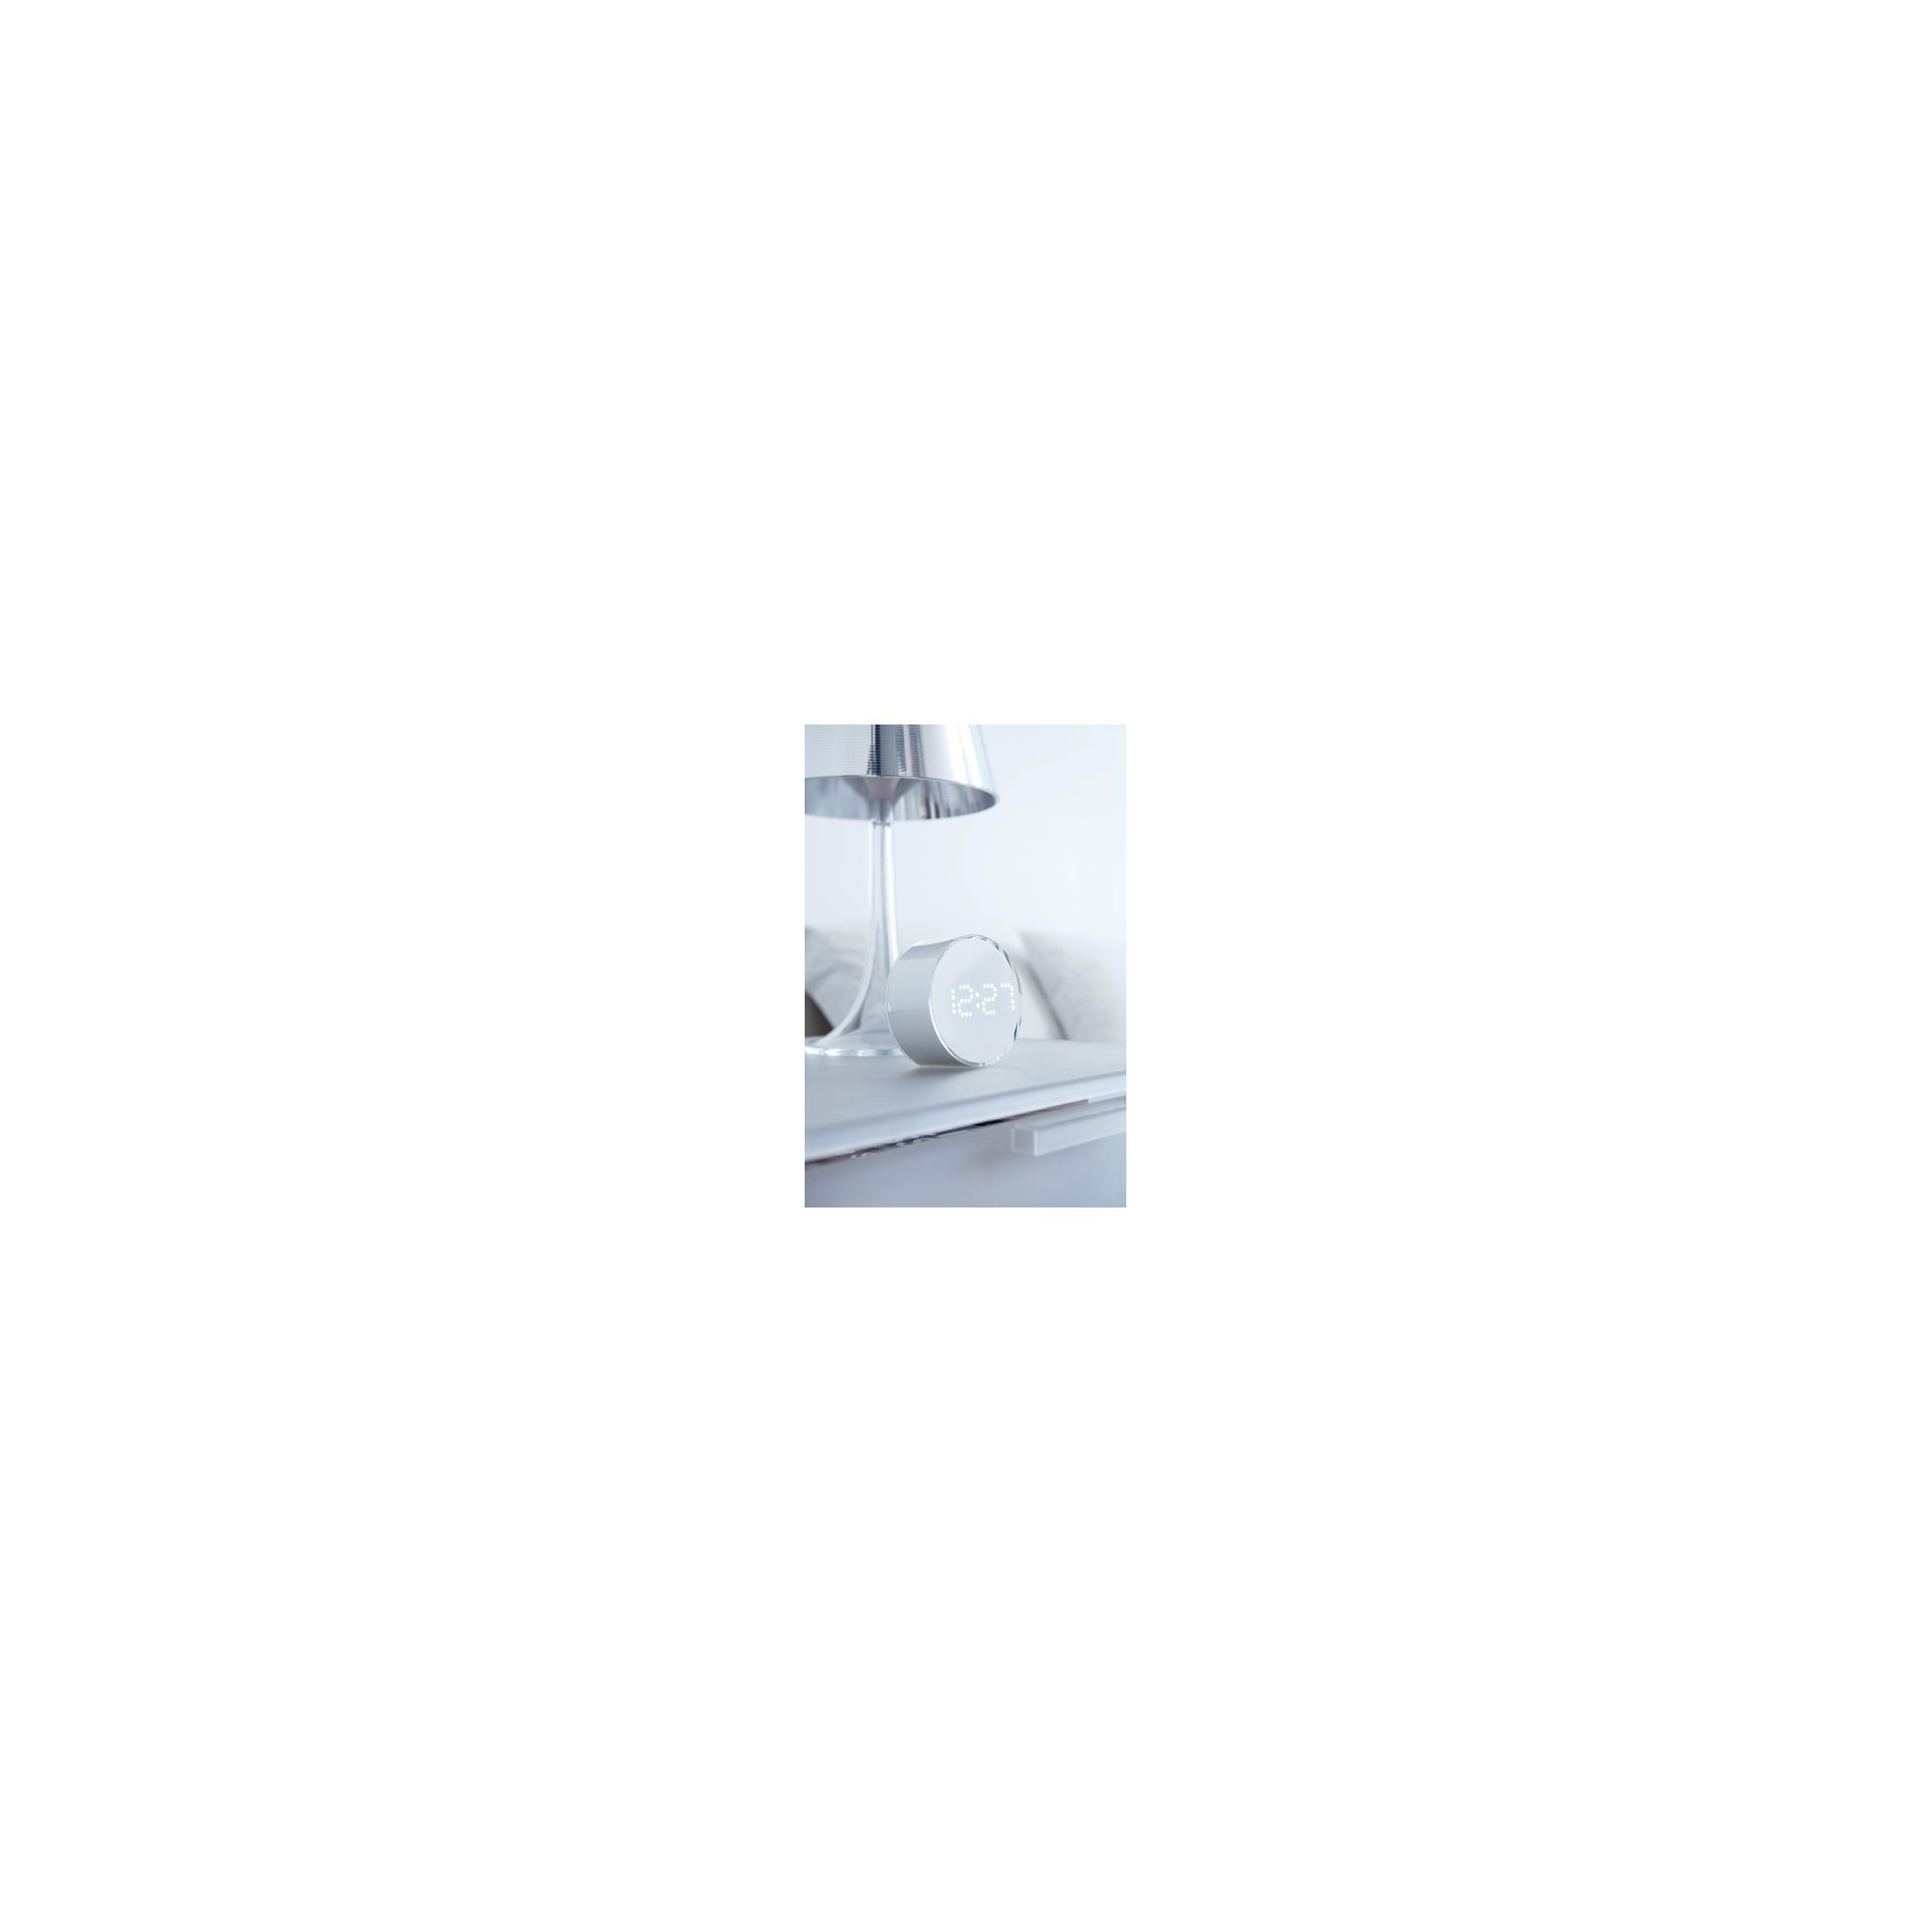 Authentics LED Round Table Alarm Clock - White/White at Tesco Direct